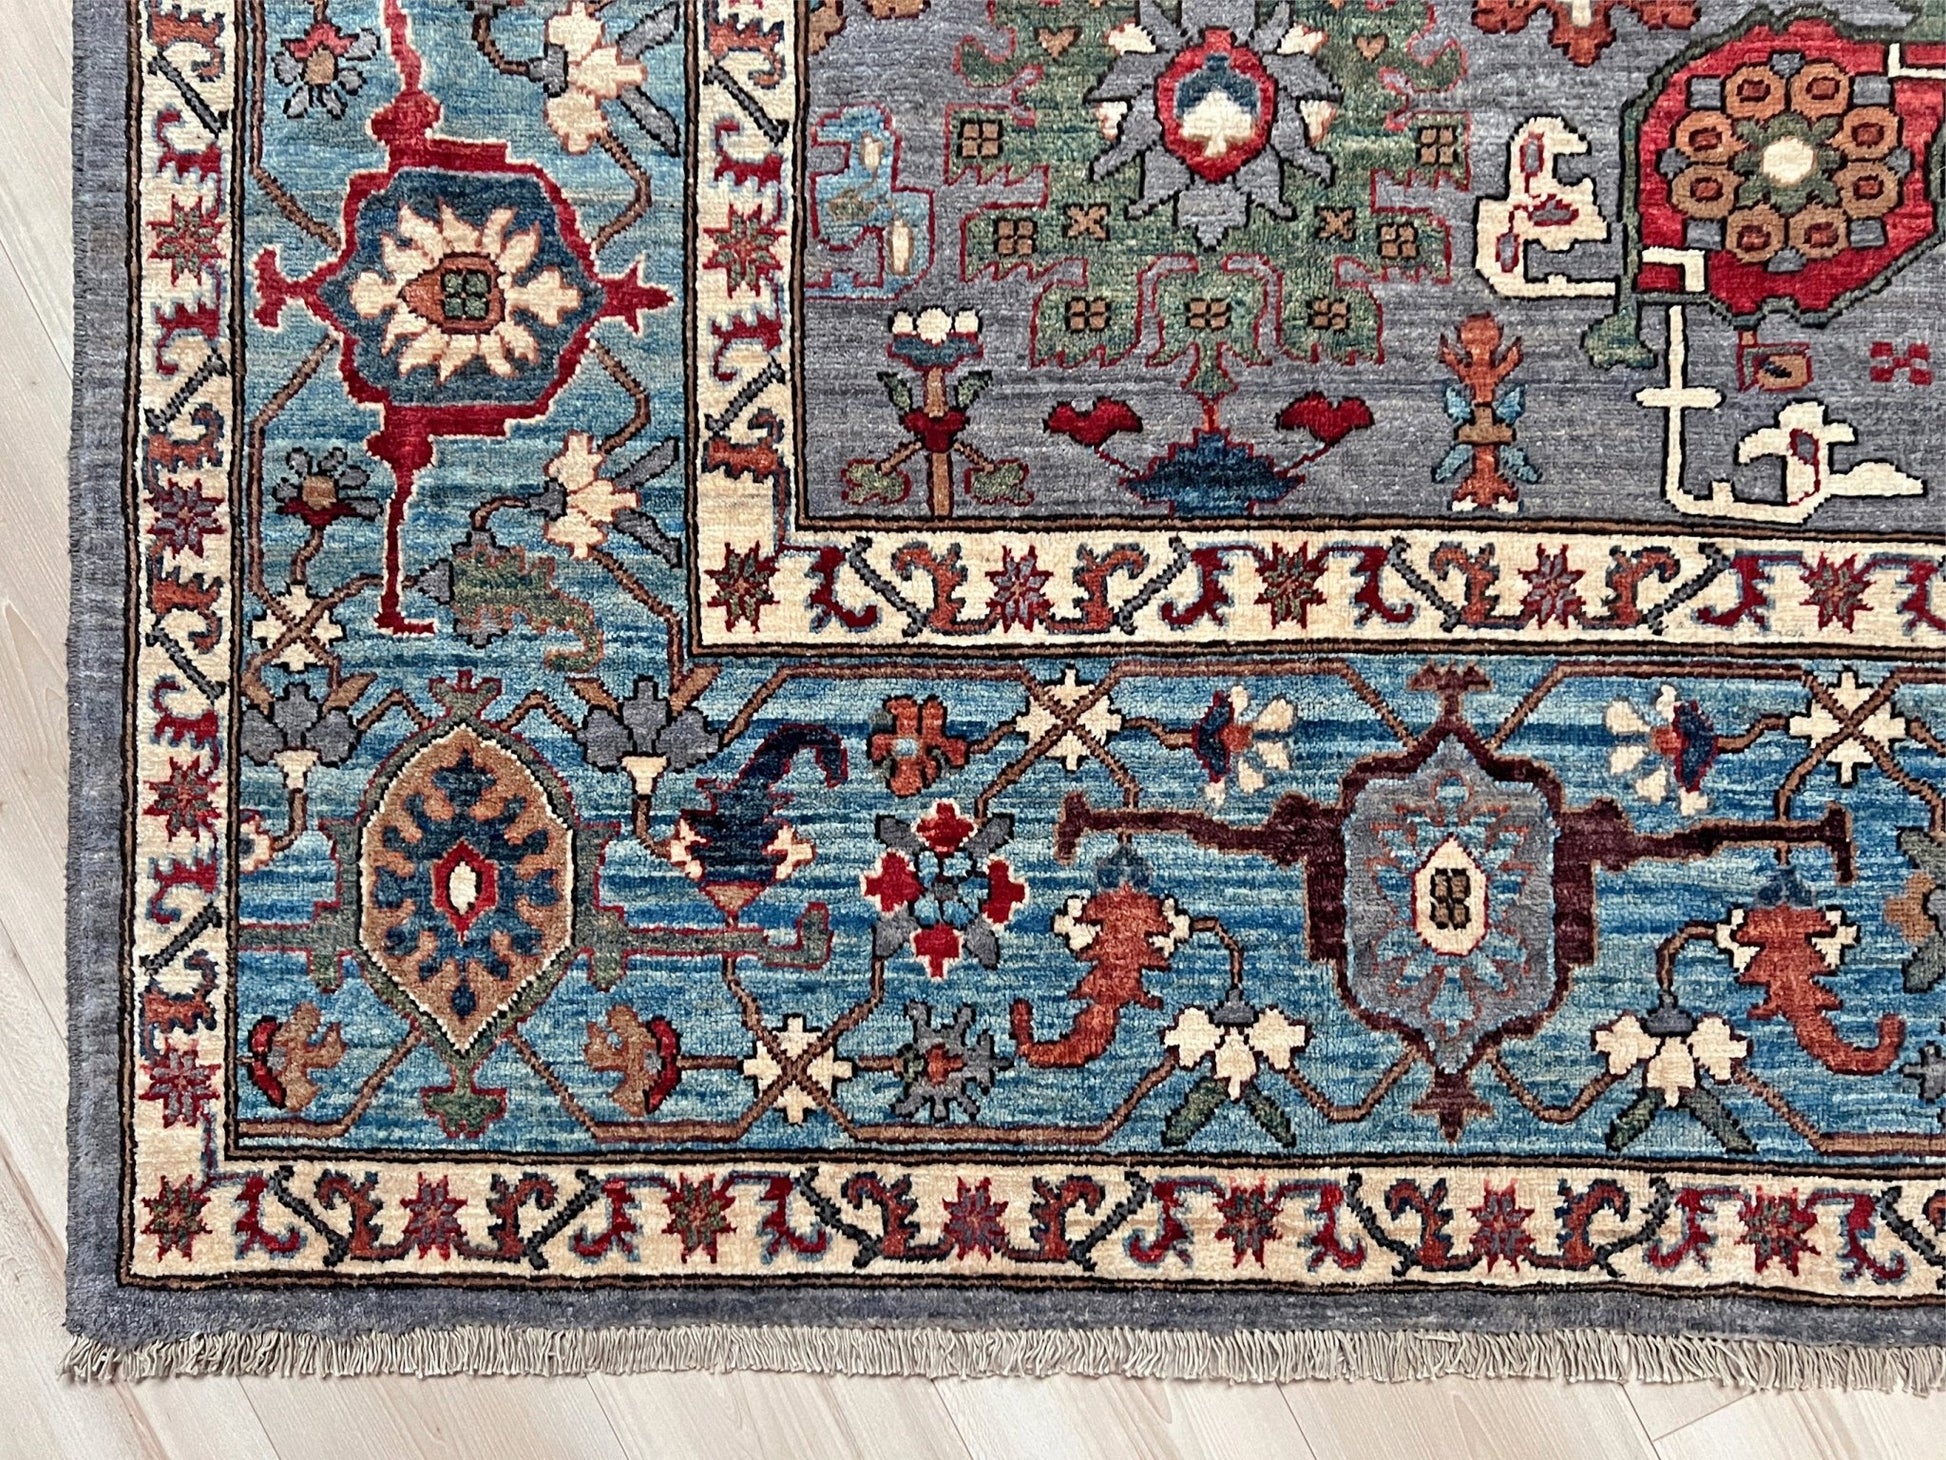 Sultani Handmade wool 10x14 area rug. Oriental rug shop san francisco bay area.  Carpet store berkeley palo alto.